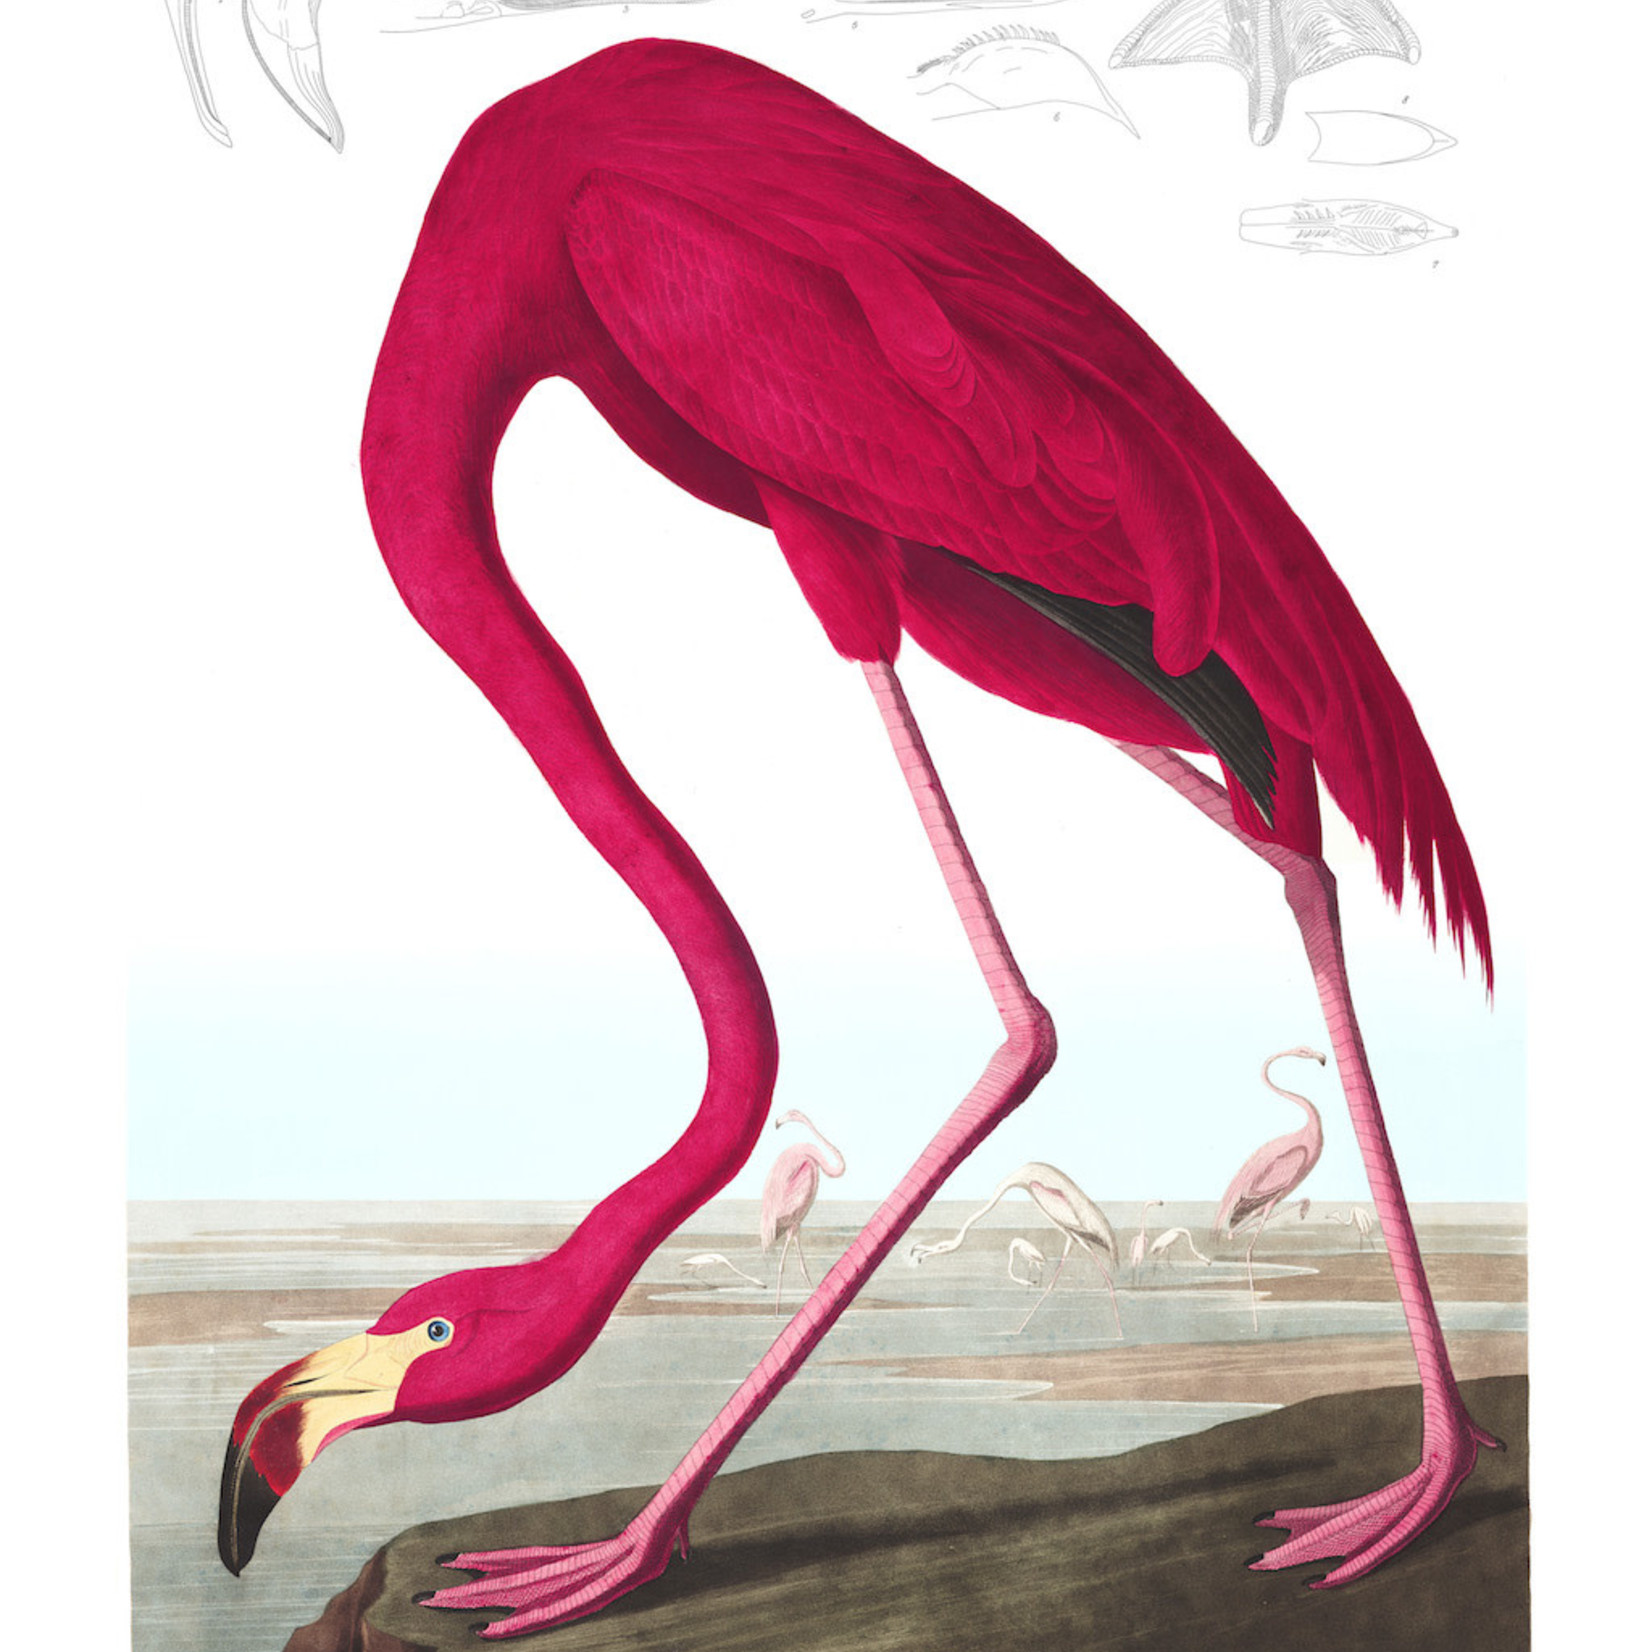 Framed Print on Rag Paper: American Flamingo by John James Audubon